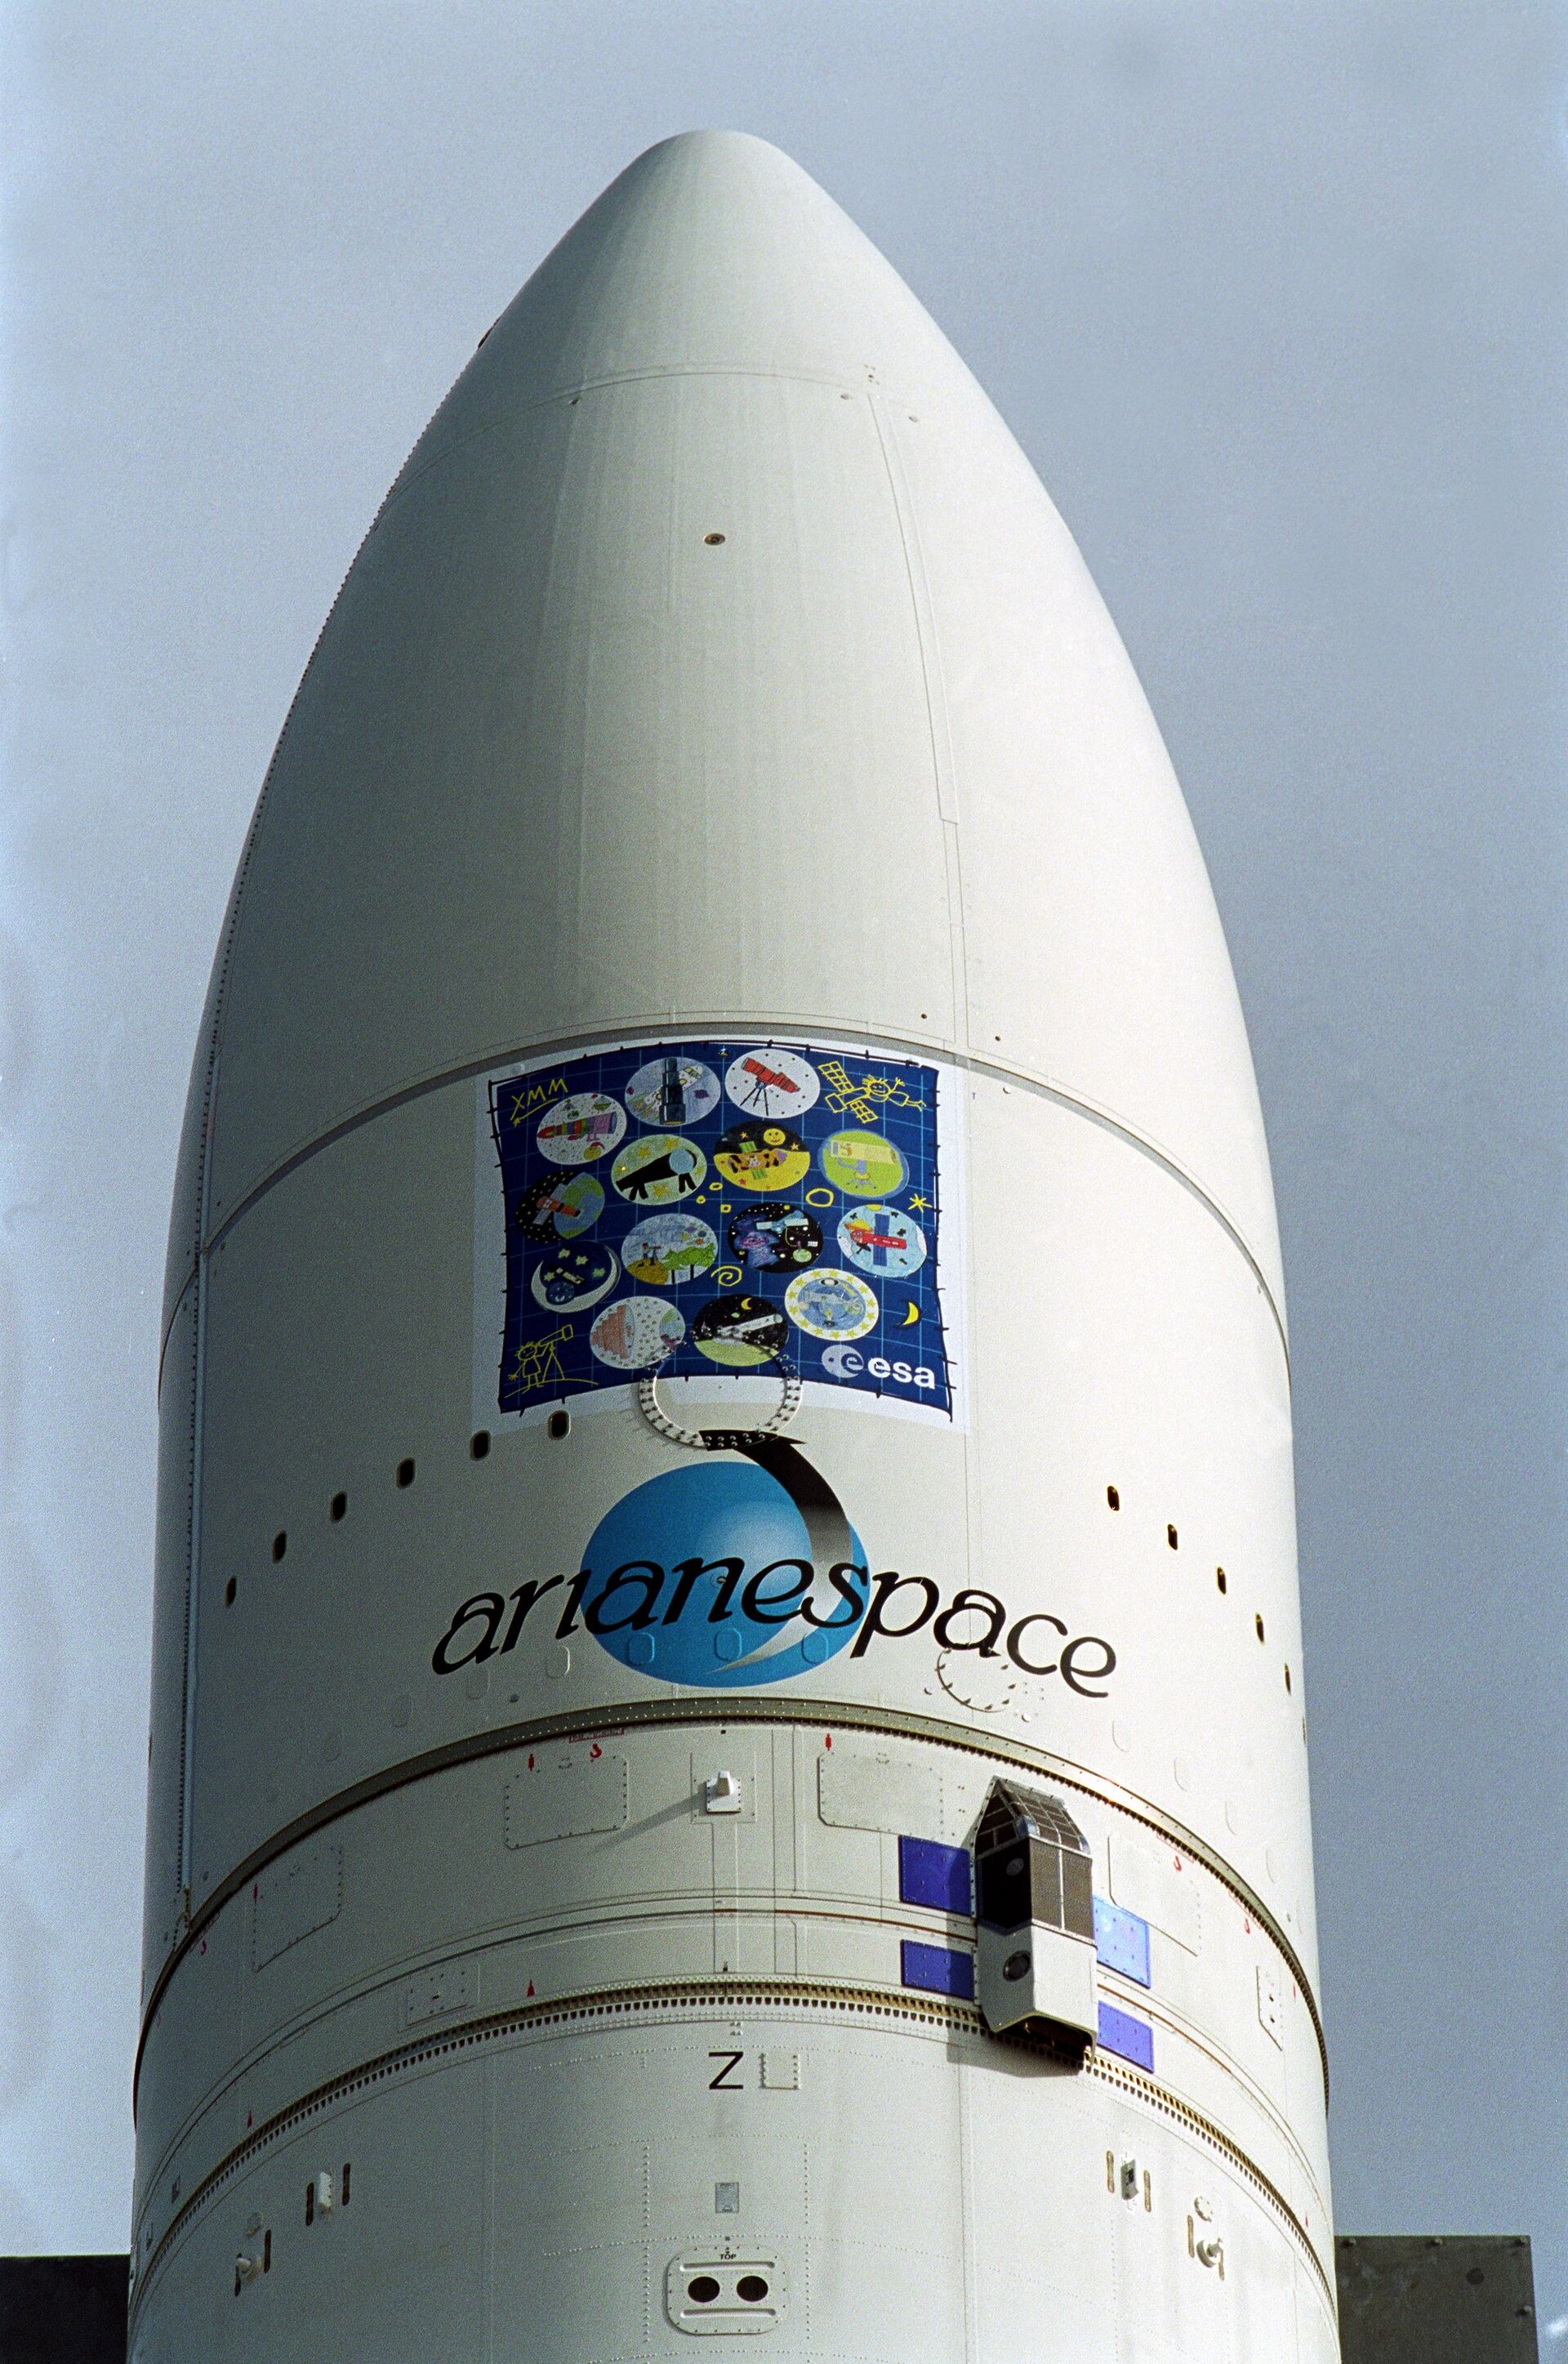 Ariane 504 fairing detail (including XMM logo)